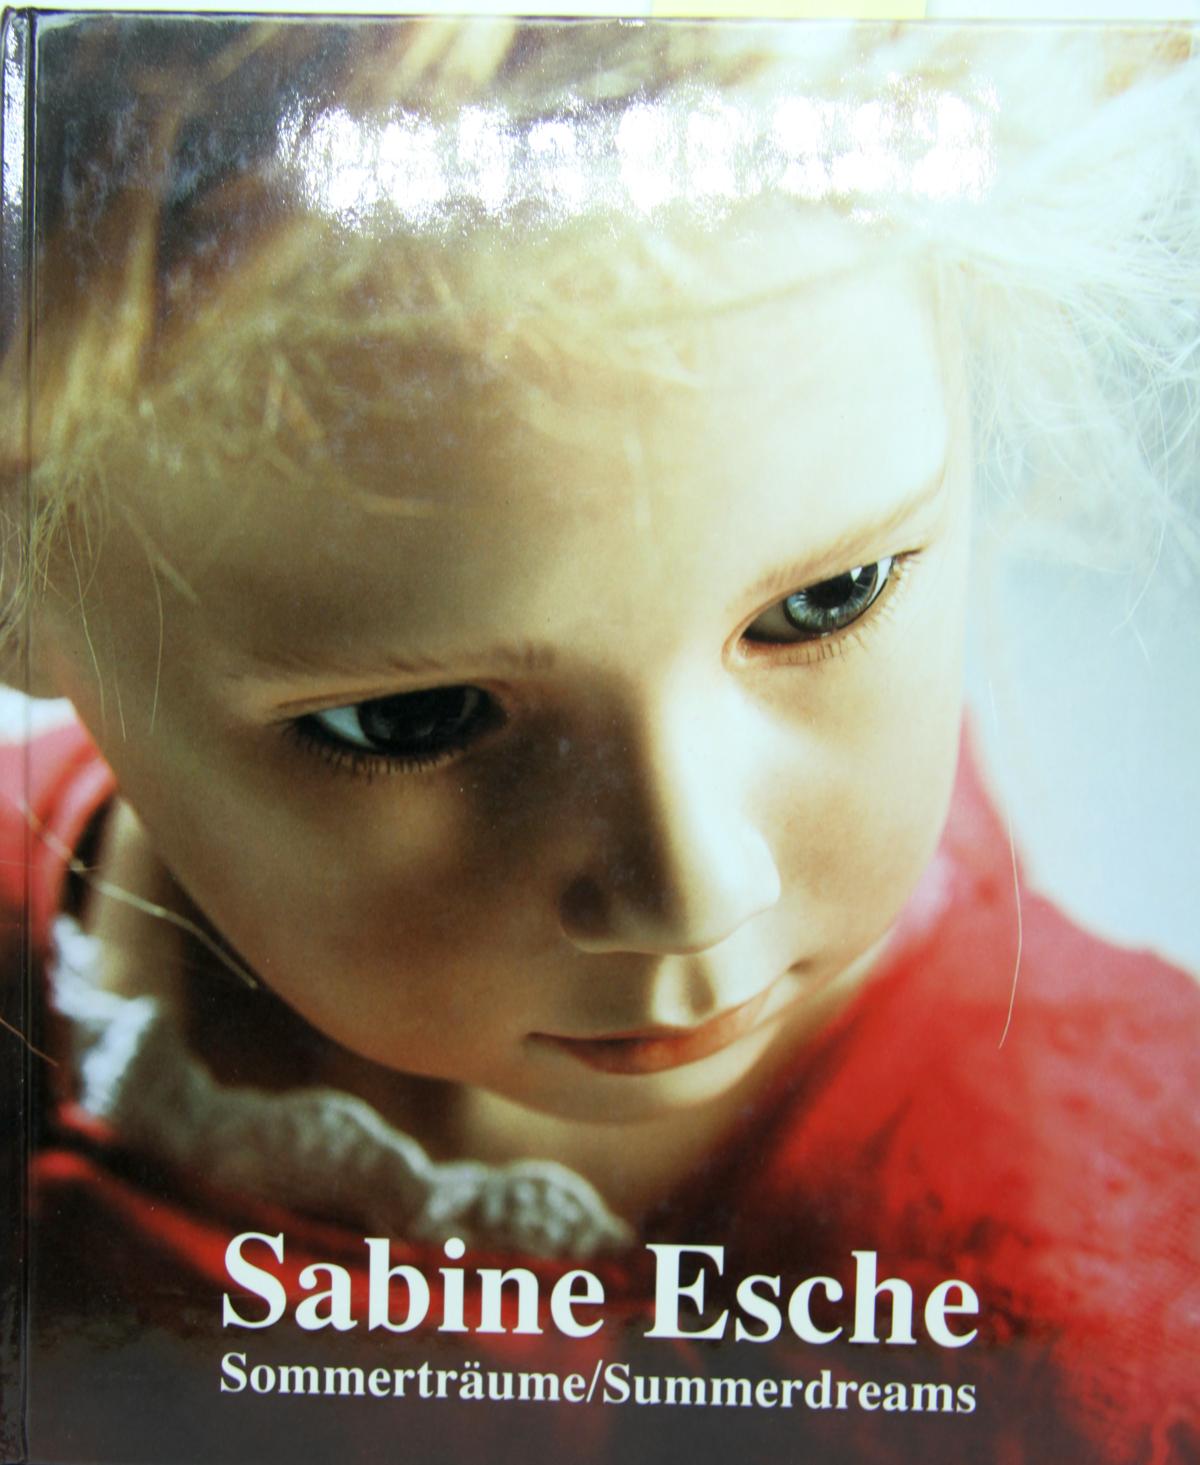 Buch "Sommerträume" Sabine Esche Laterna magica